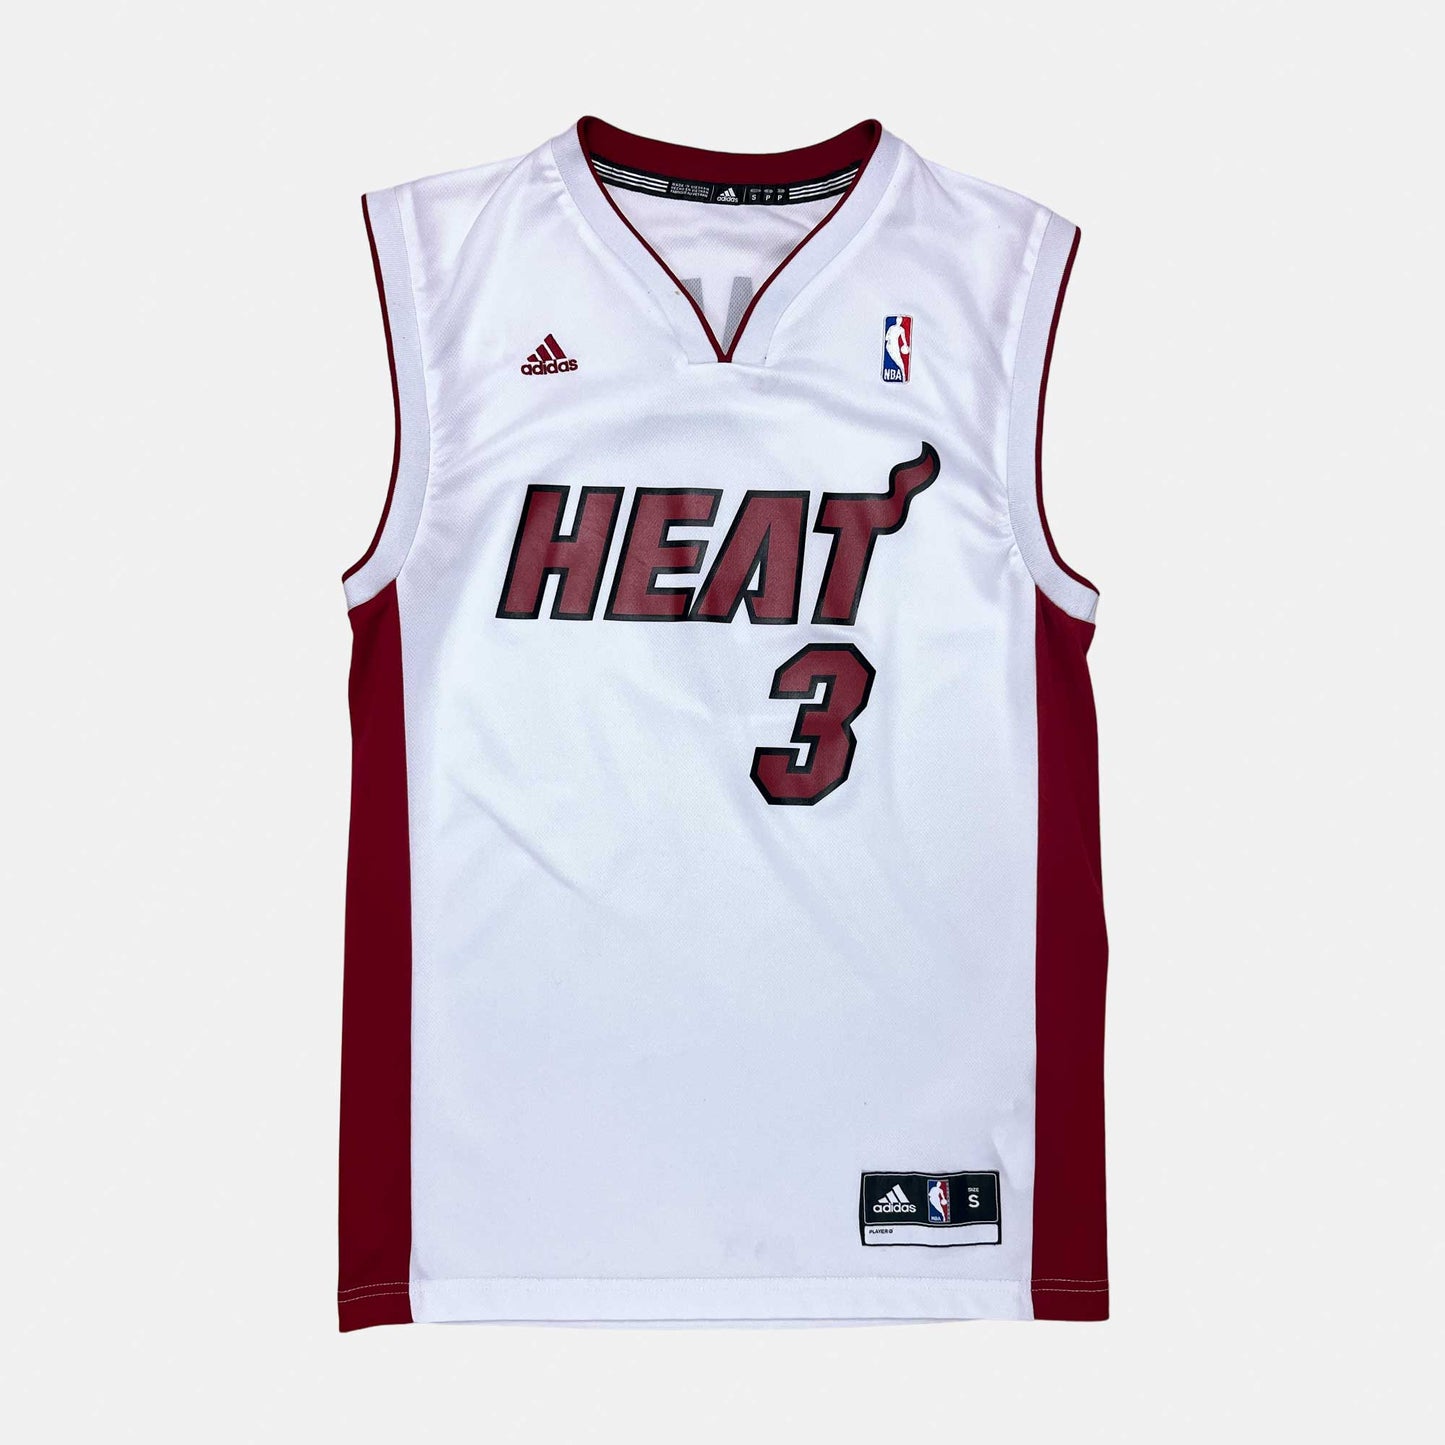 Miami Heat - Dwyane Wade - Größe M - Adidas - NBA Trikot